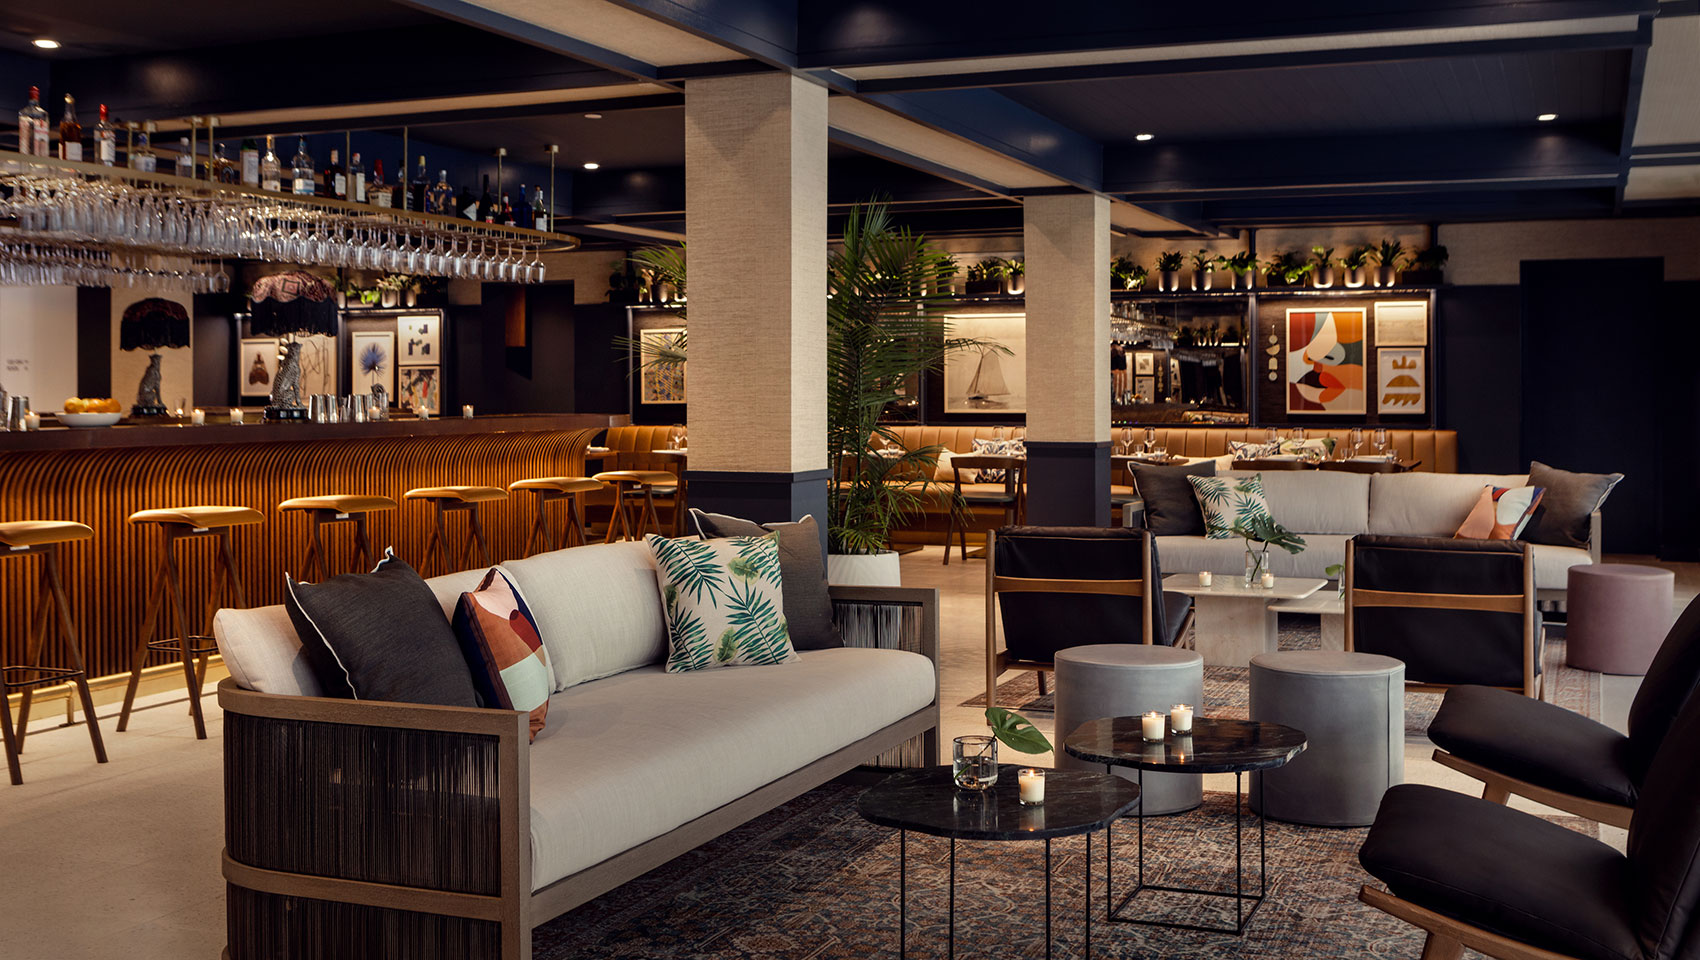 La Fuga lounge with bar and seating